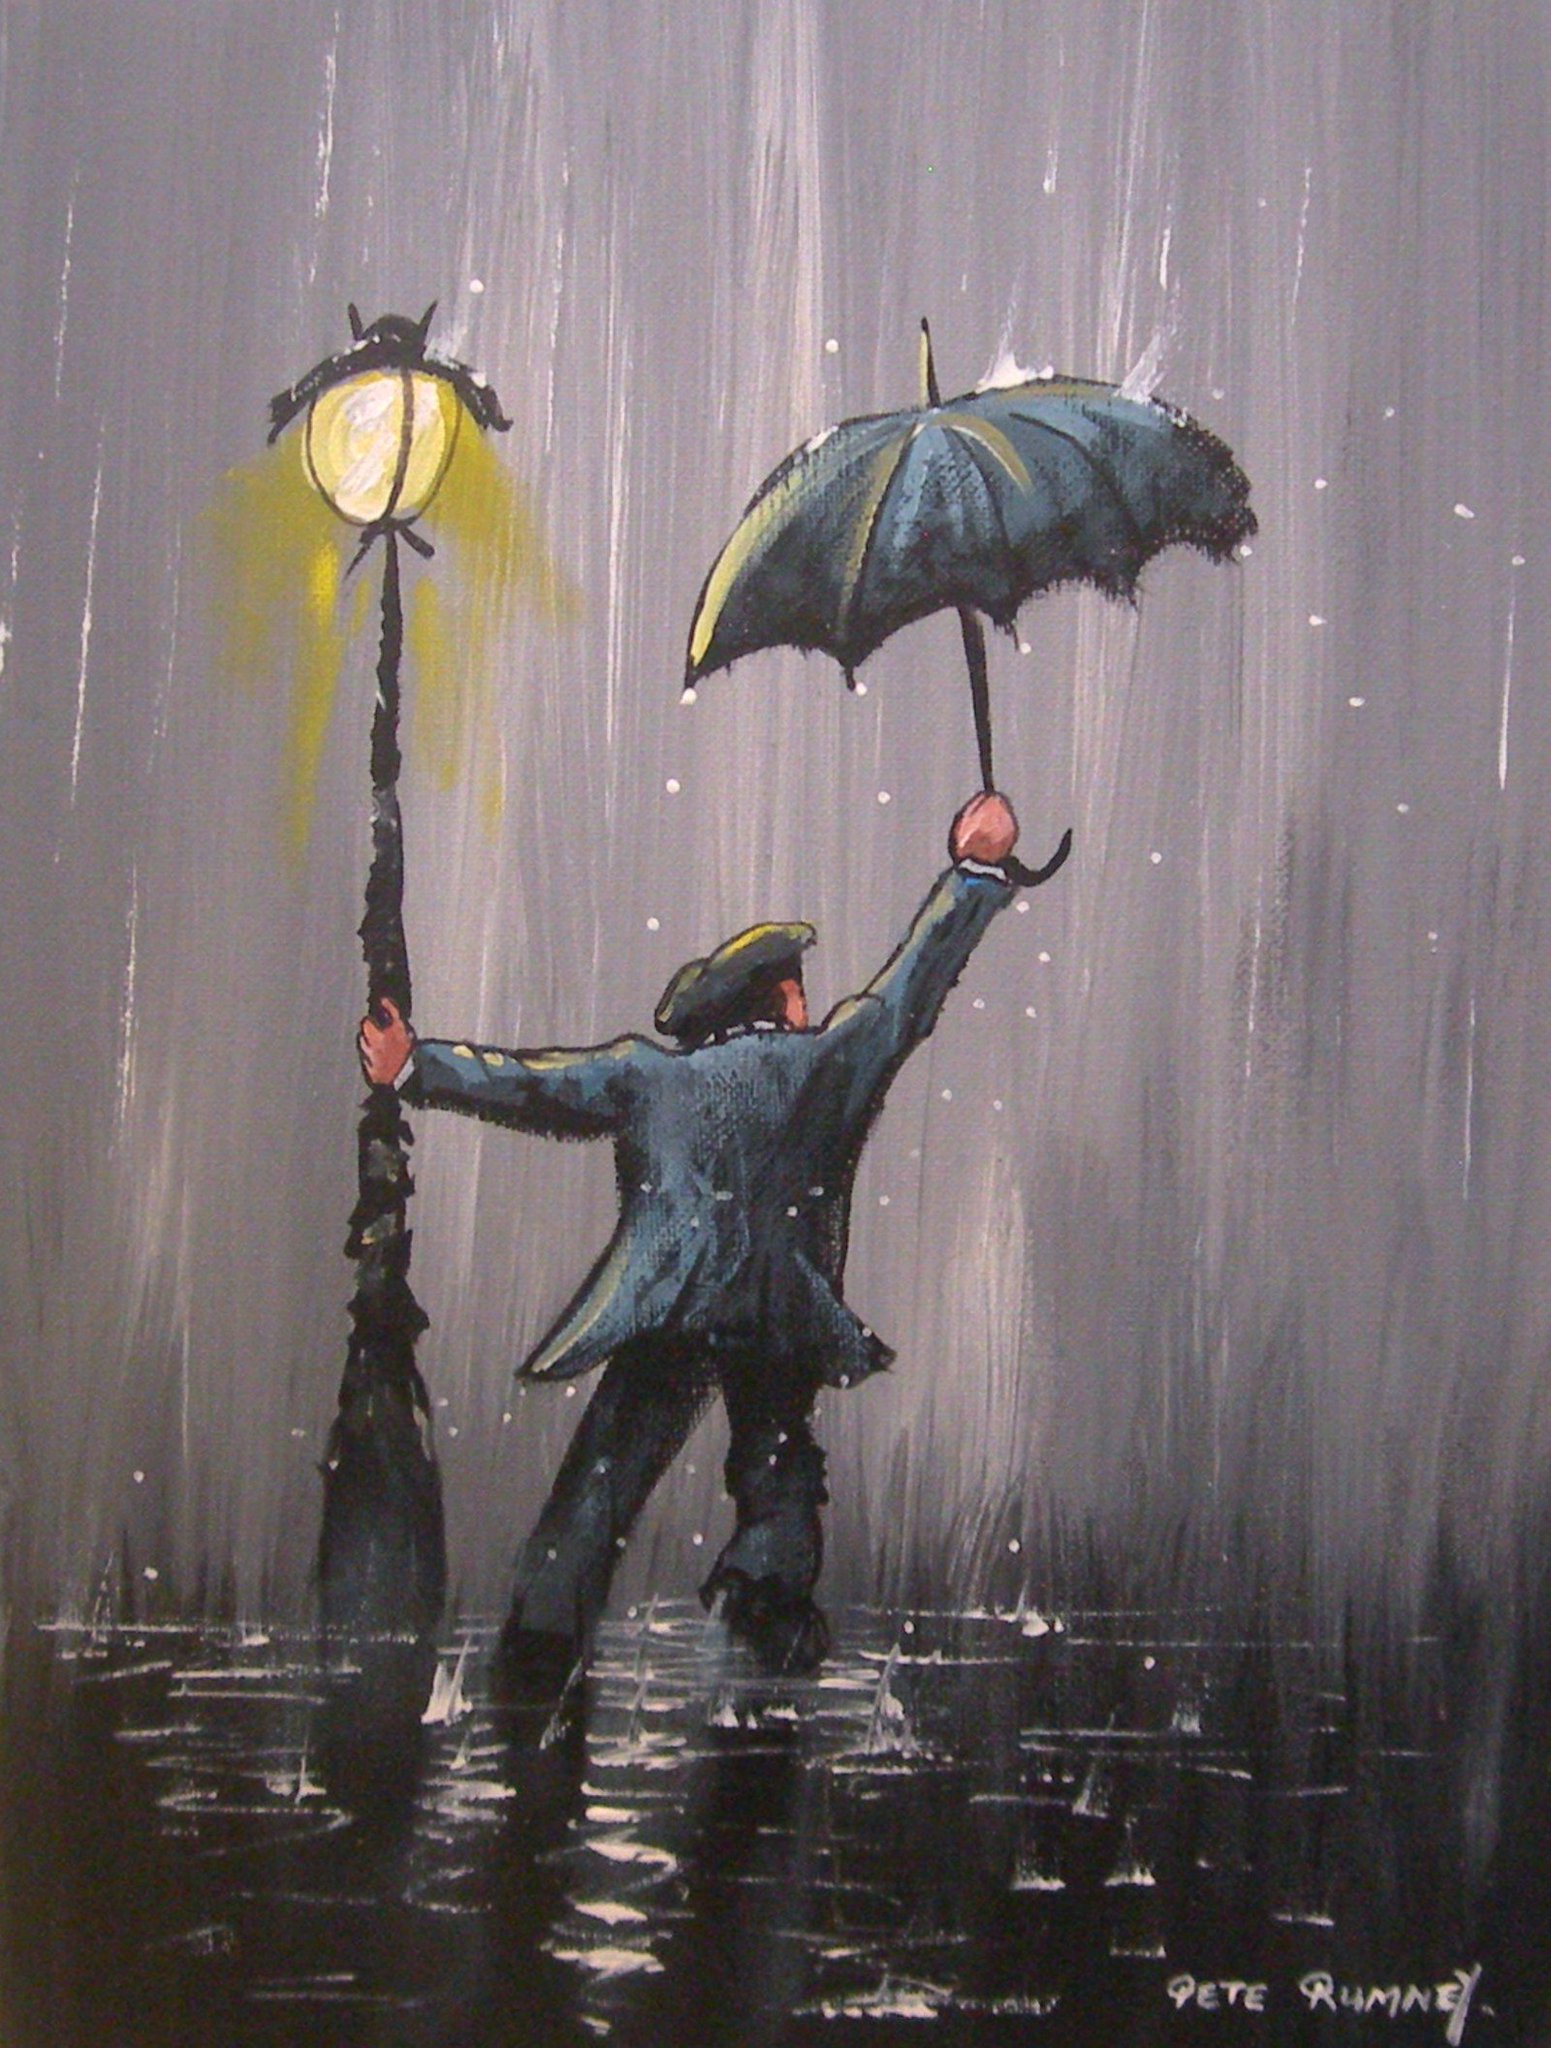 PETE RUMNEY ART on Twitter: "don't let the rain get you down ! ht...